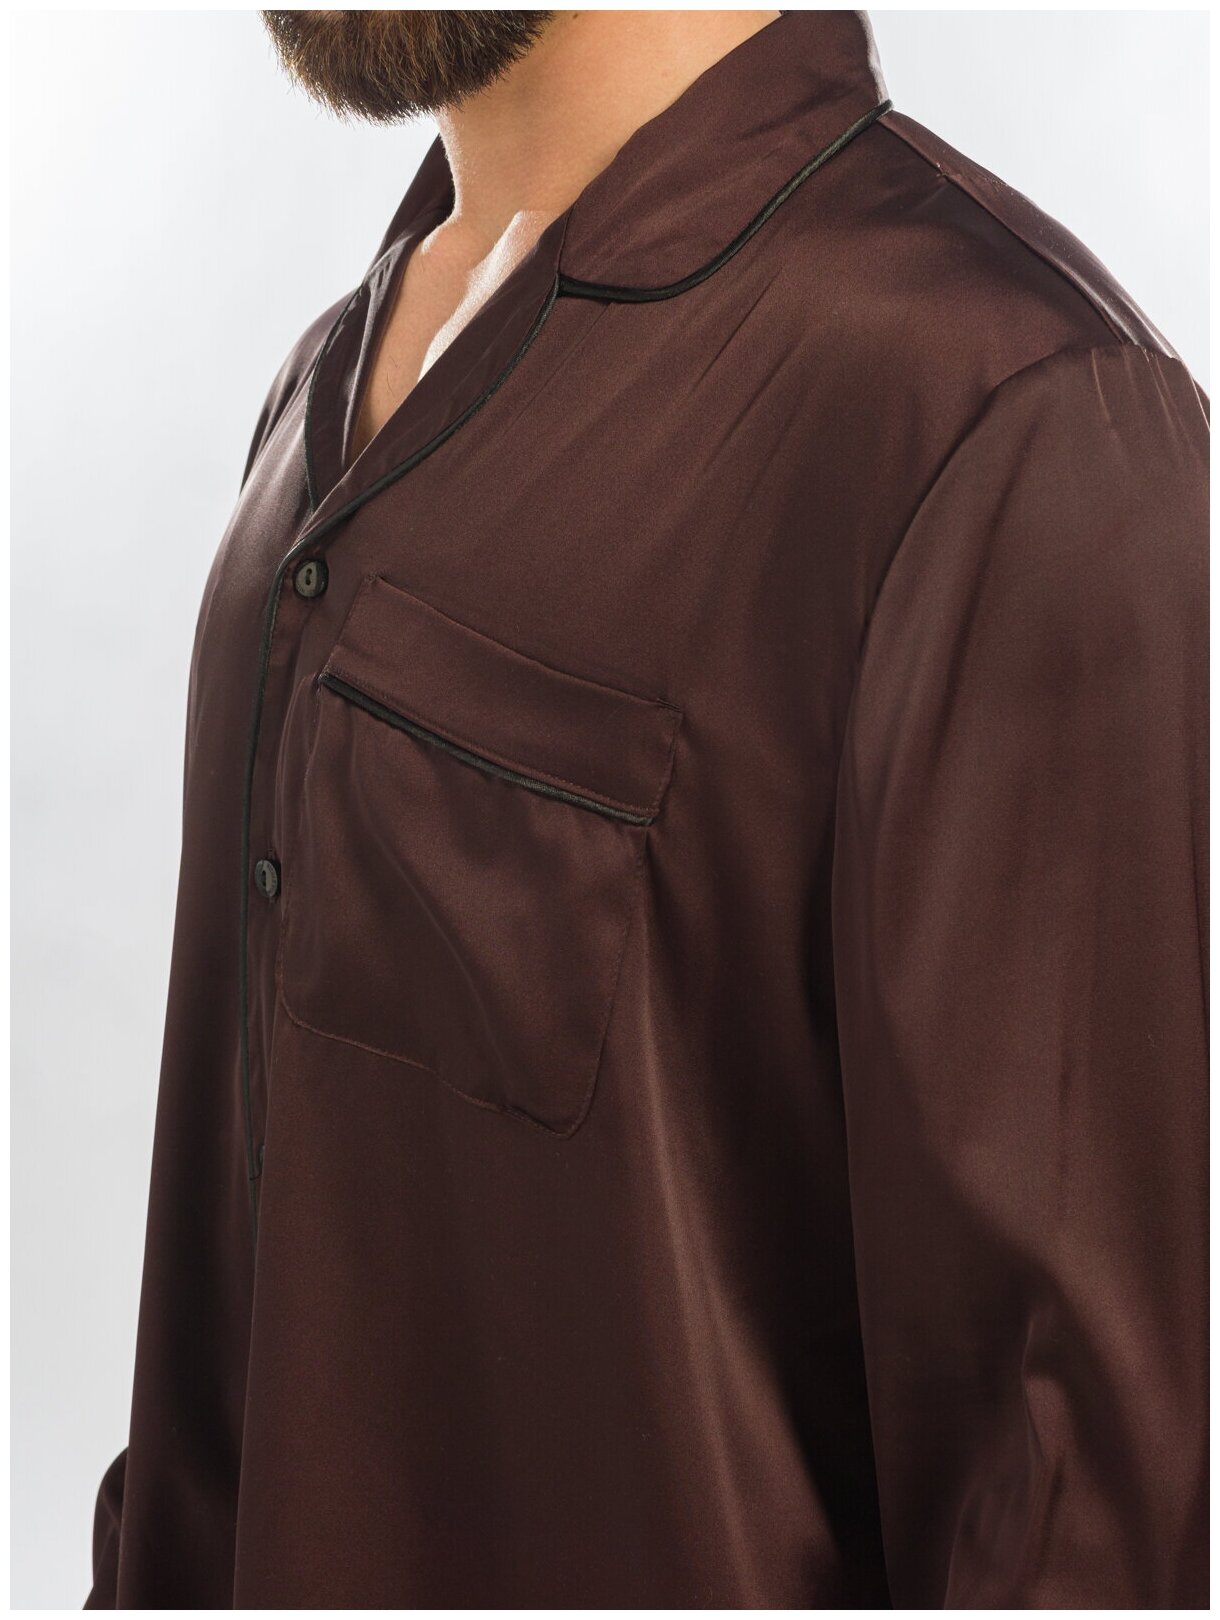 Пижама мужская Nicole Home размер XXL коричневая - фотография № 3